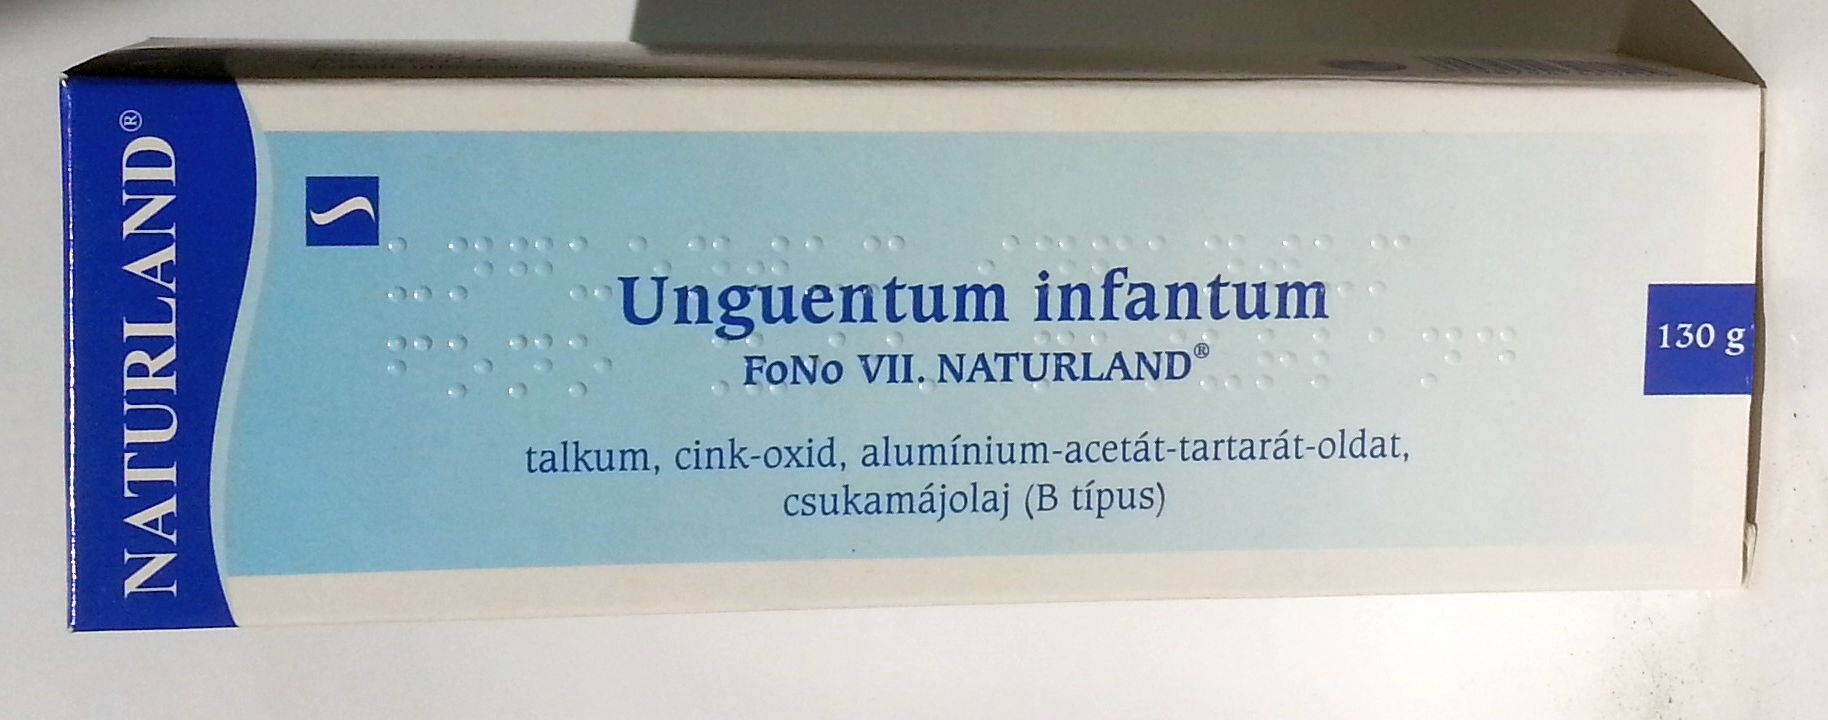 NL UNG. INFANTUM.jpg